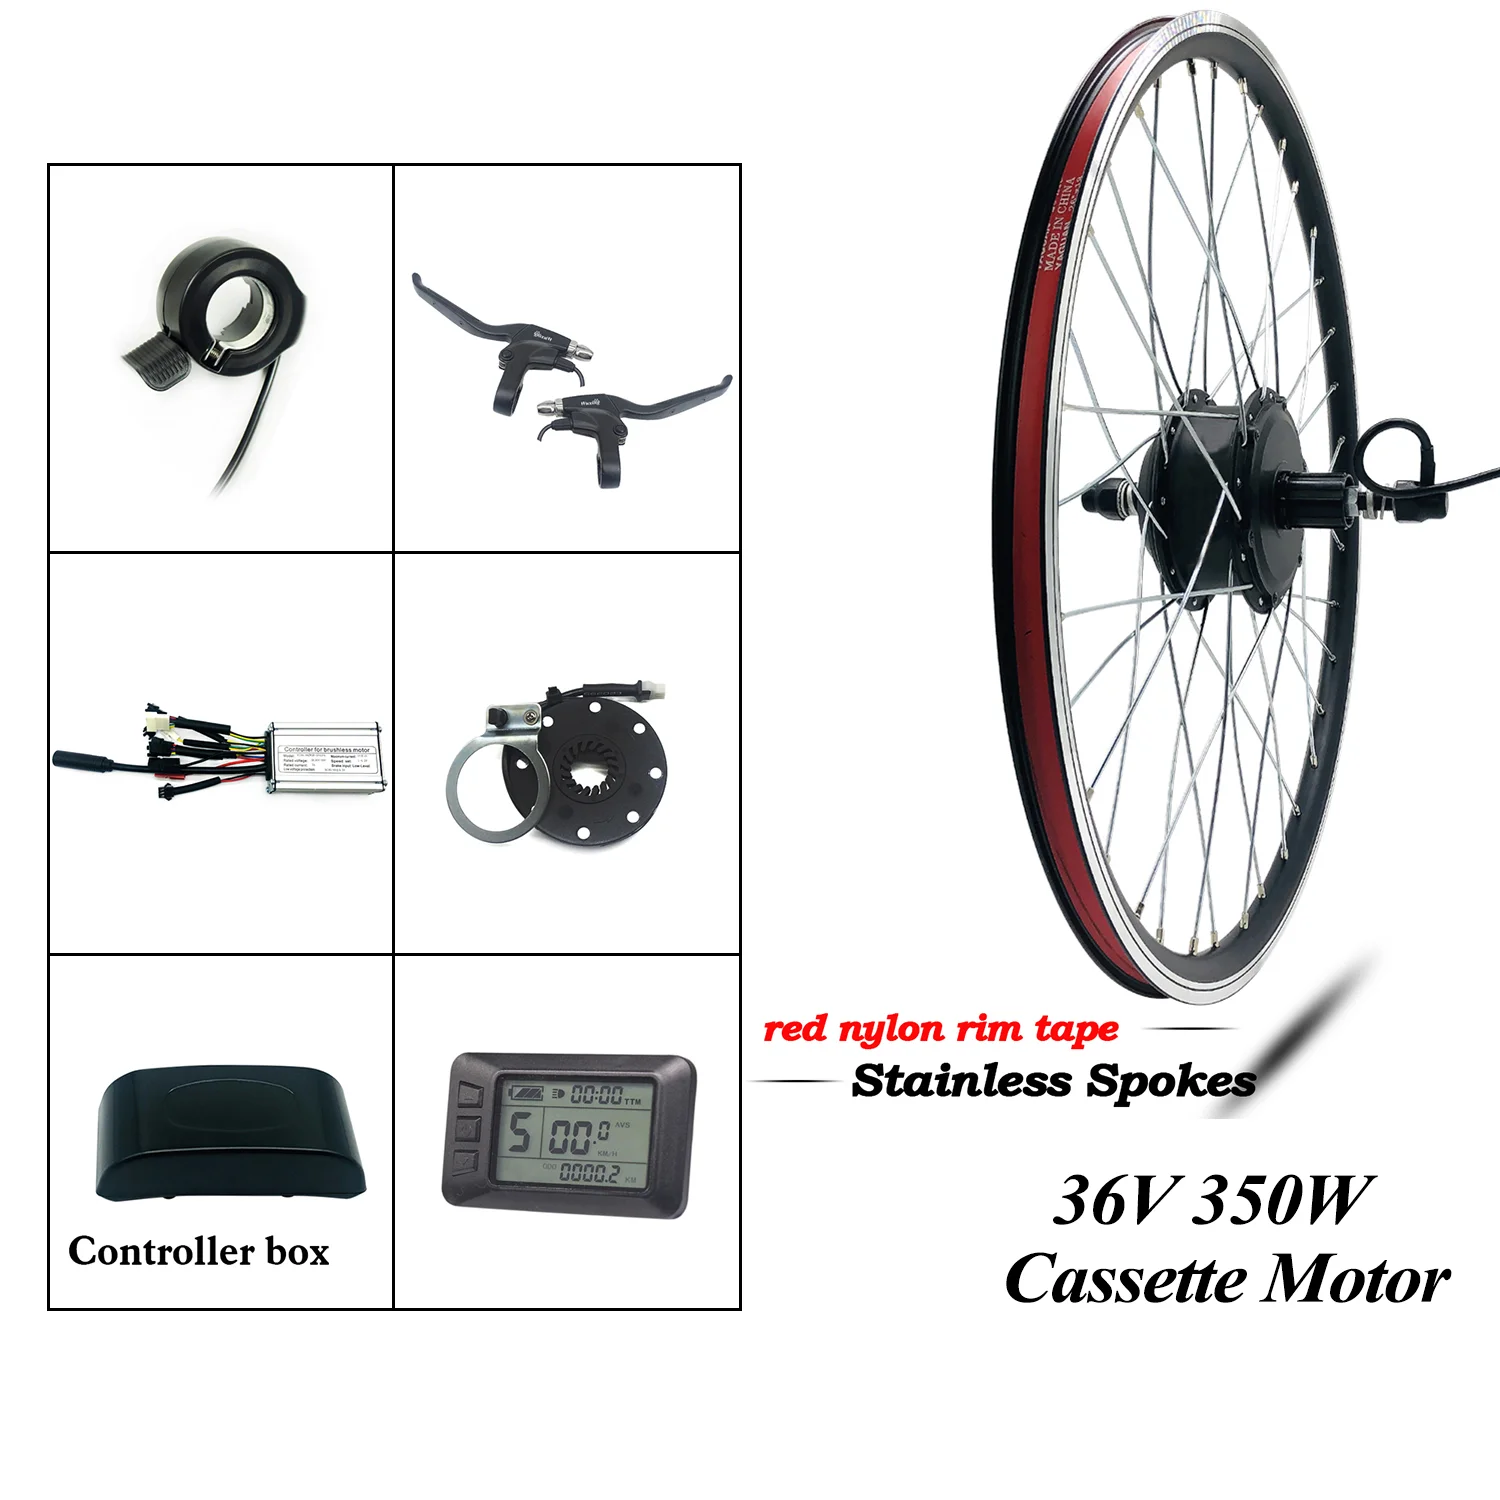 

Greenpedel 36v 350w china 26 inch cassette wheel electric bicycle motor e bike conversion kit